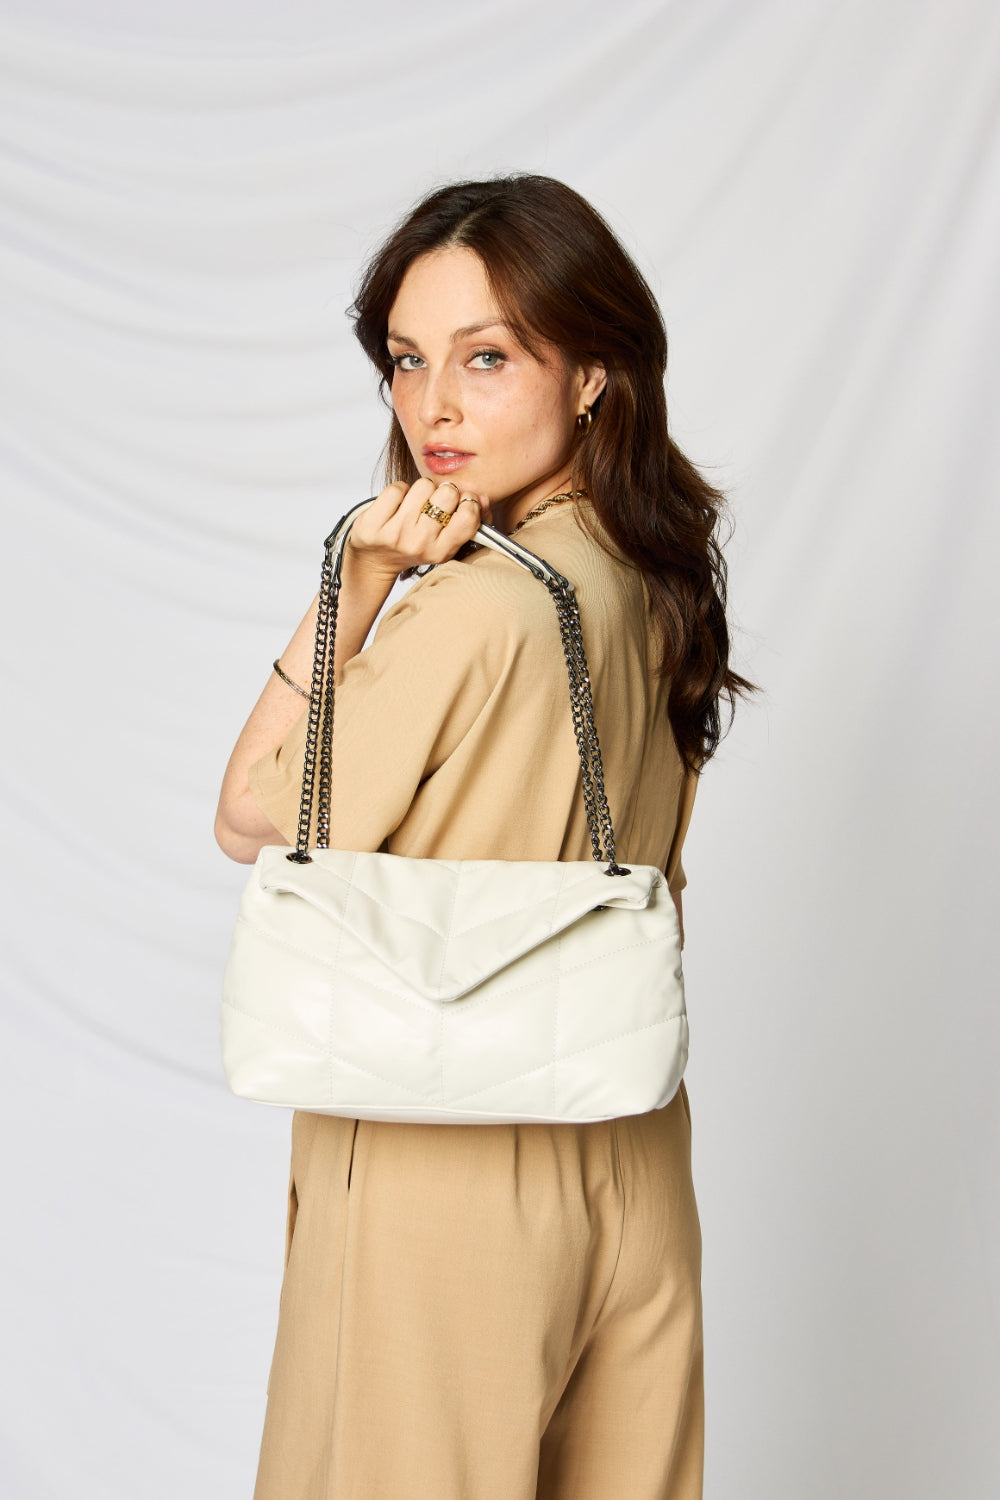 SHOMICO PU Leather Chain Handbag BEIGE One Size